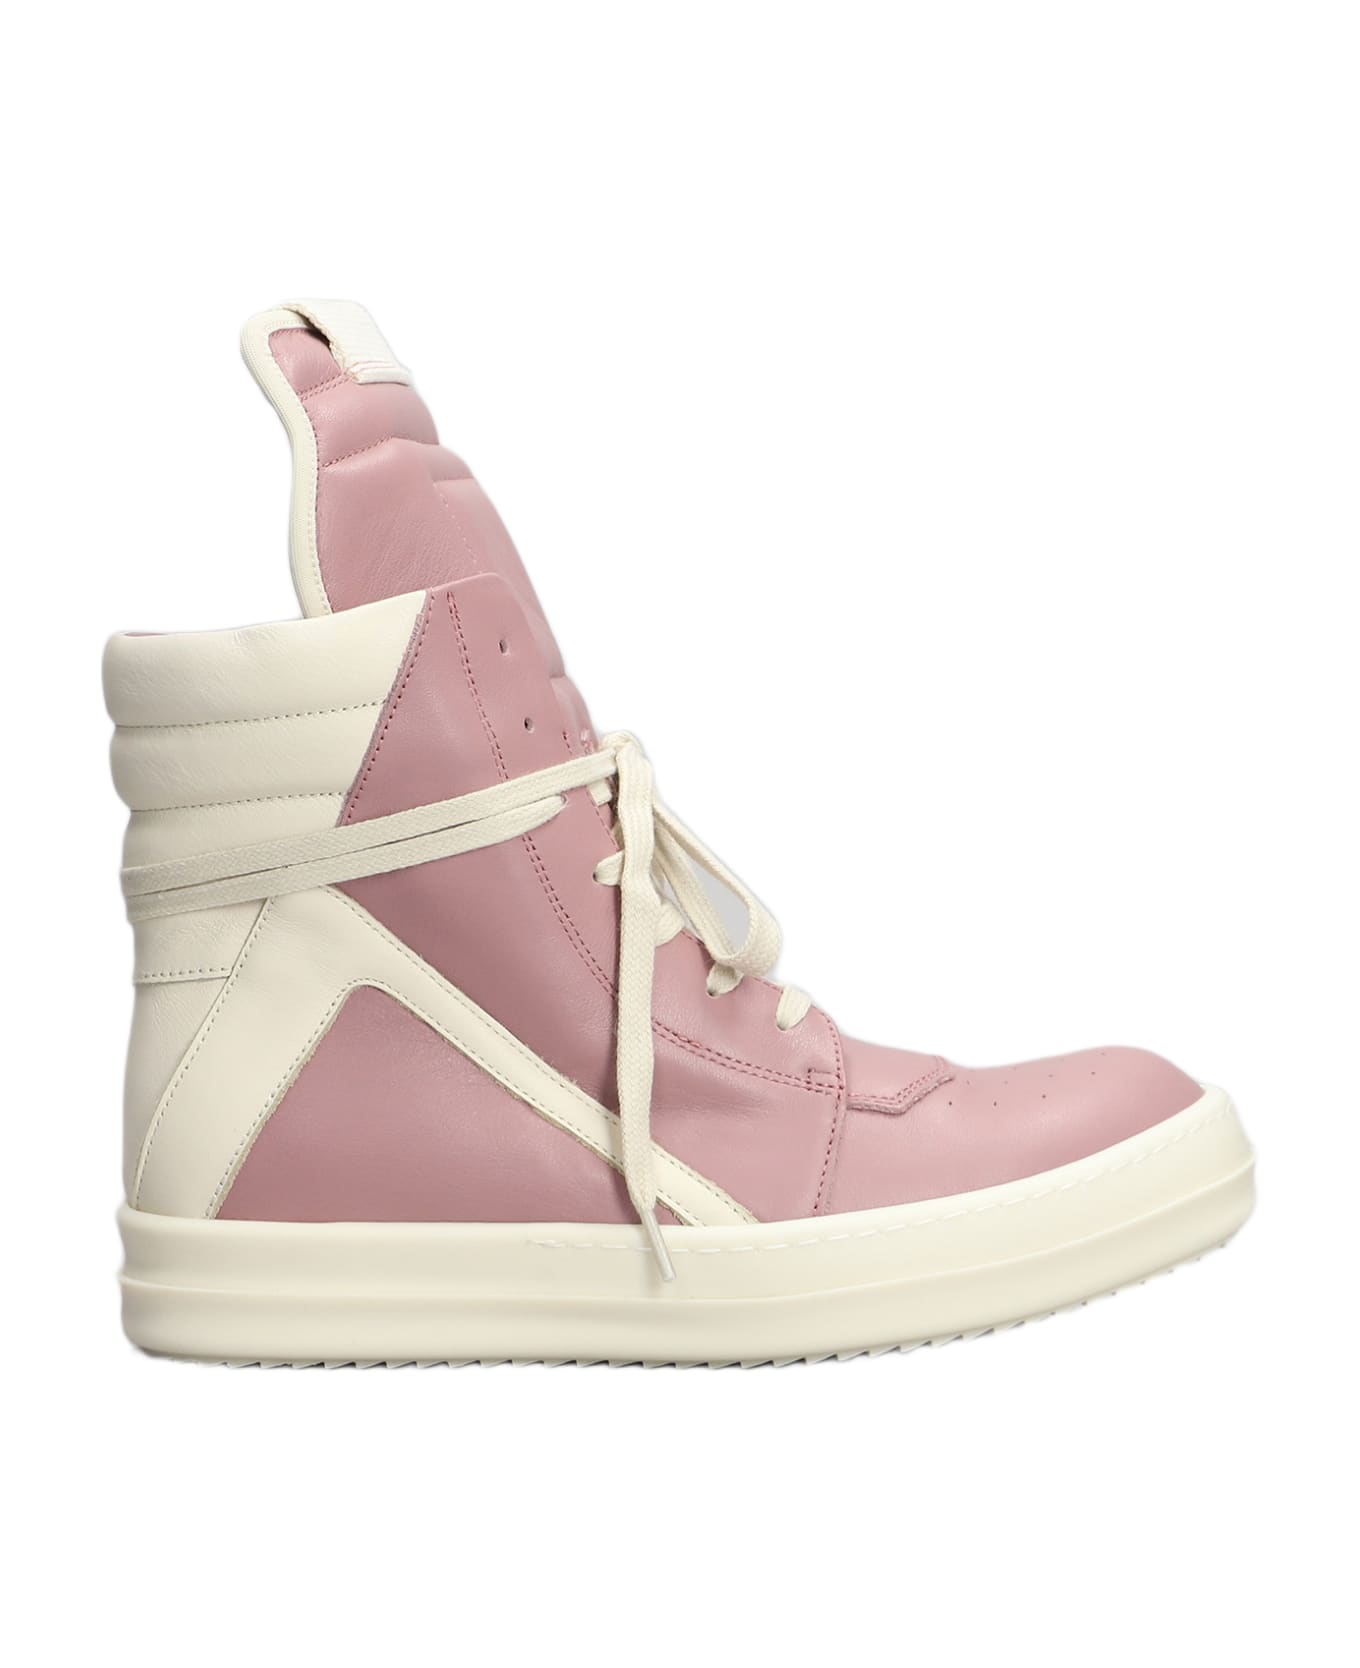 Rick Owens Geobasket Sneakers In Rose-pink Leather - rose-pink スニーカー